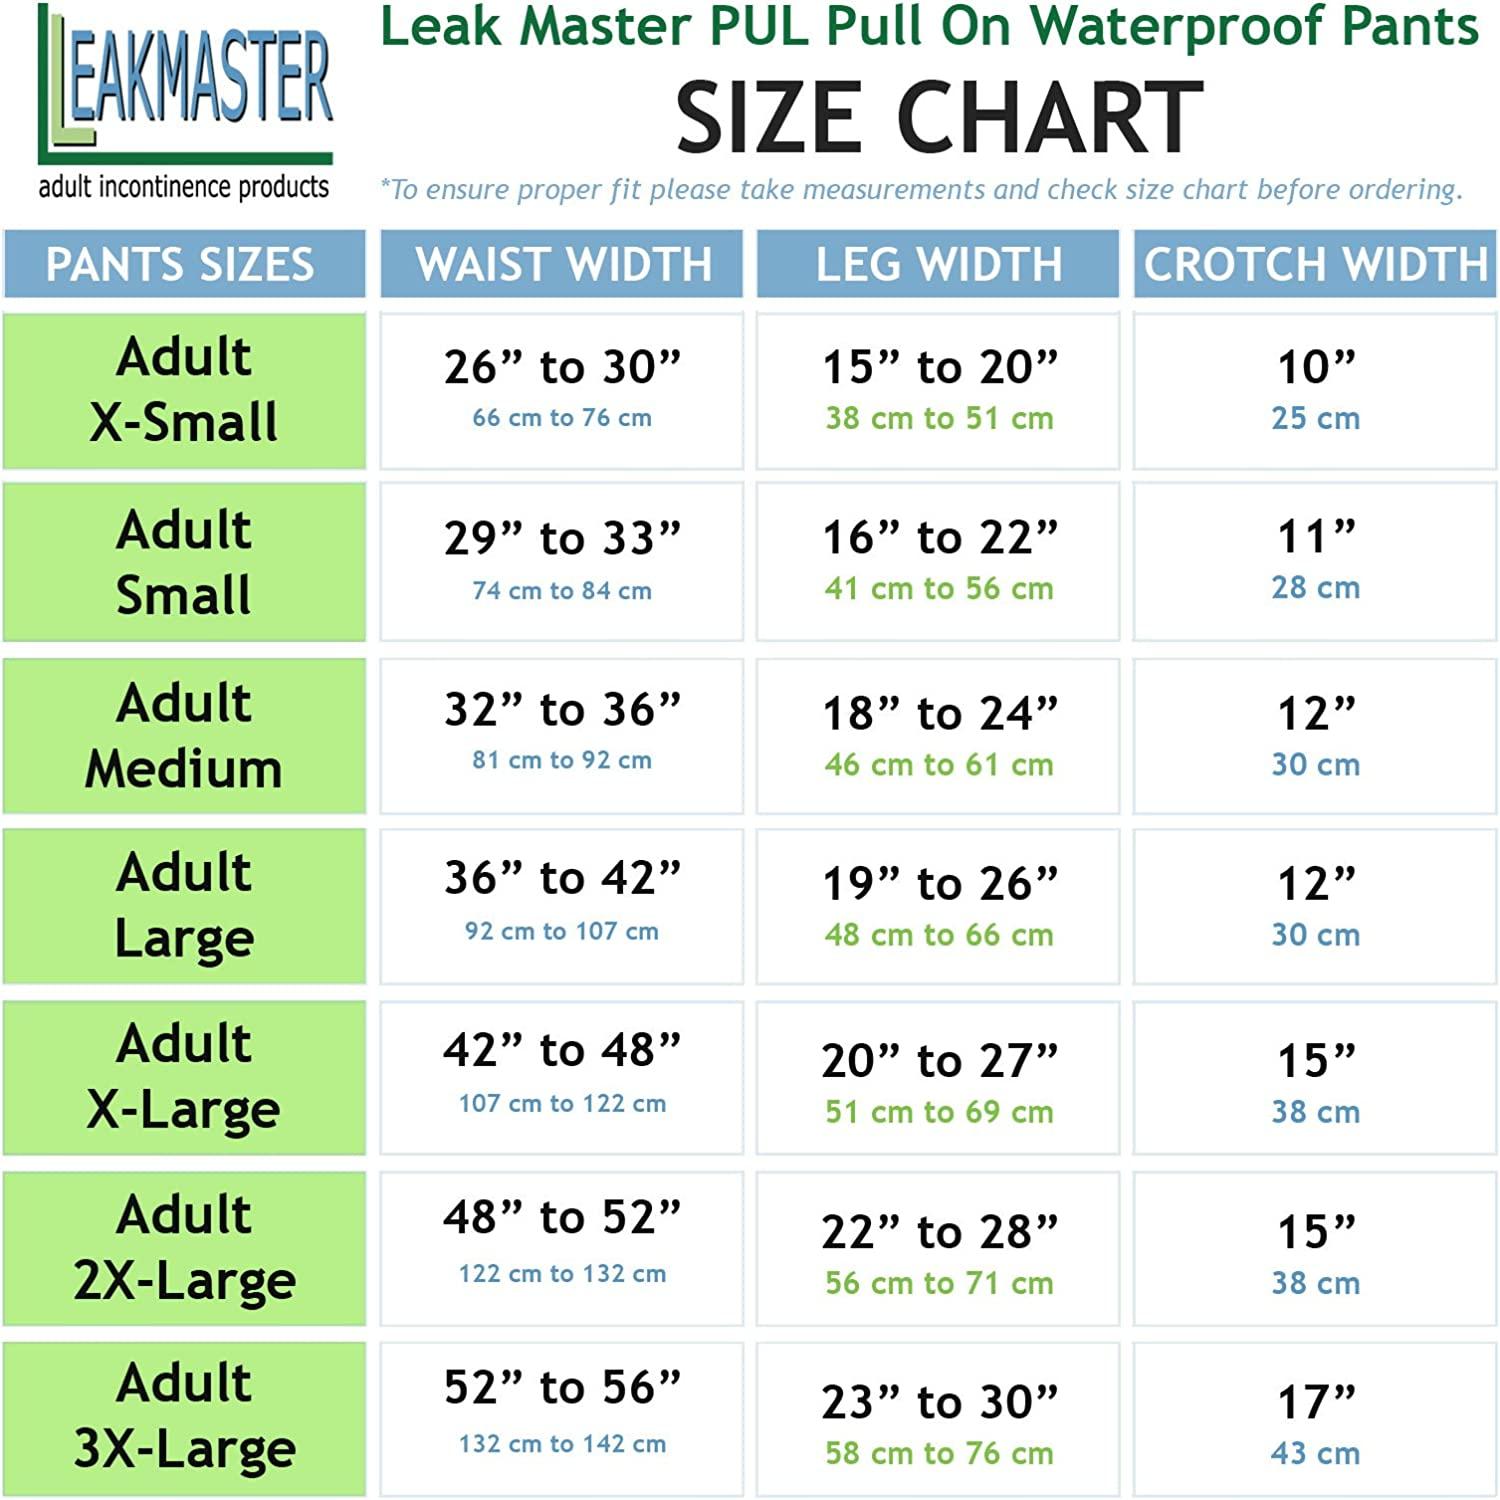 LeakMaster Adult PUL Waterproof Pants - Soft, Quiet, Breathable